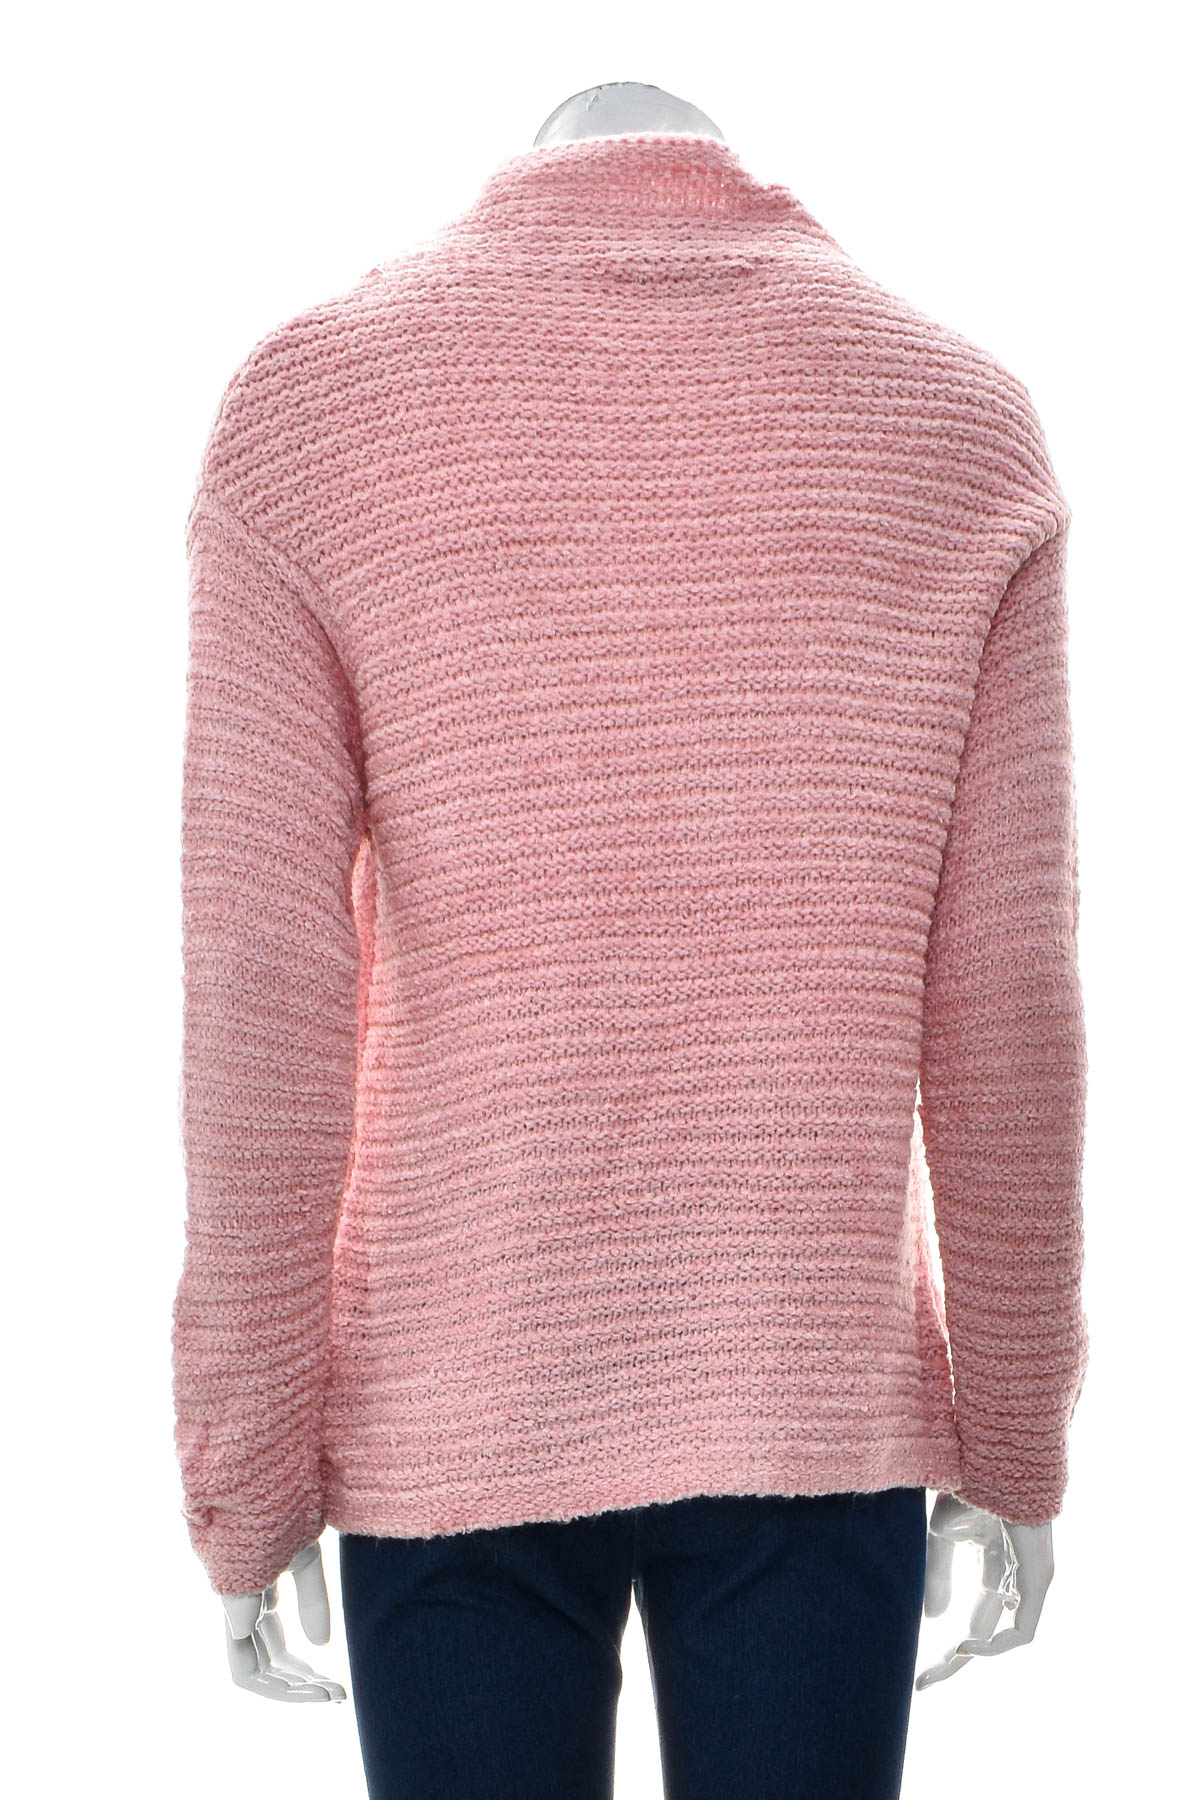 Women's sweater - Suzannegrae - 1